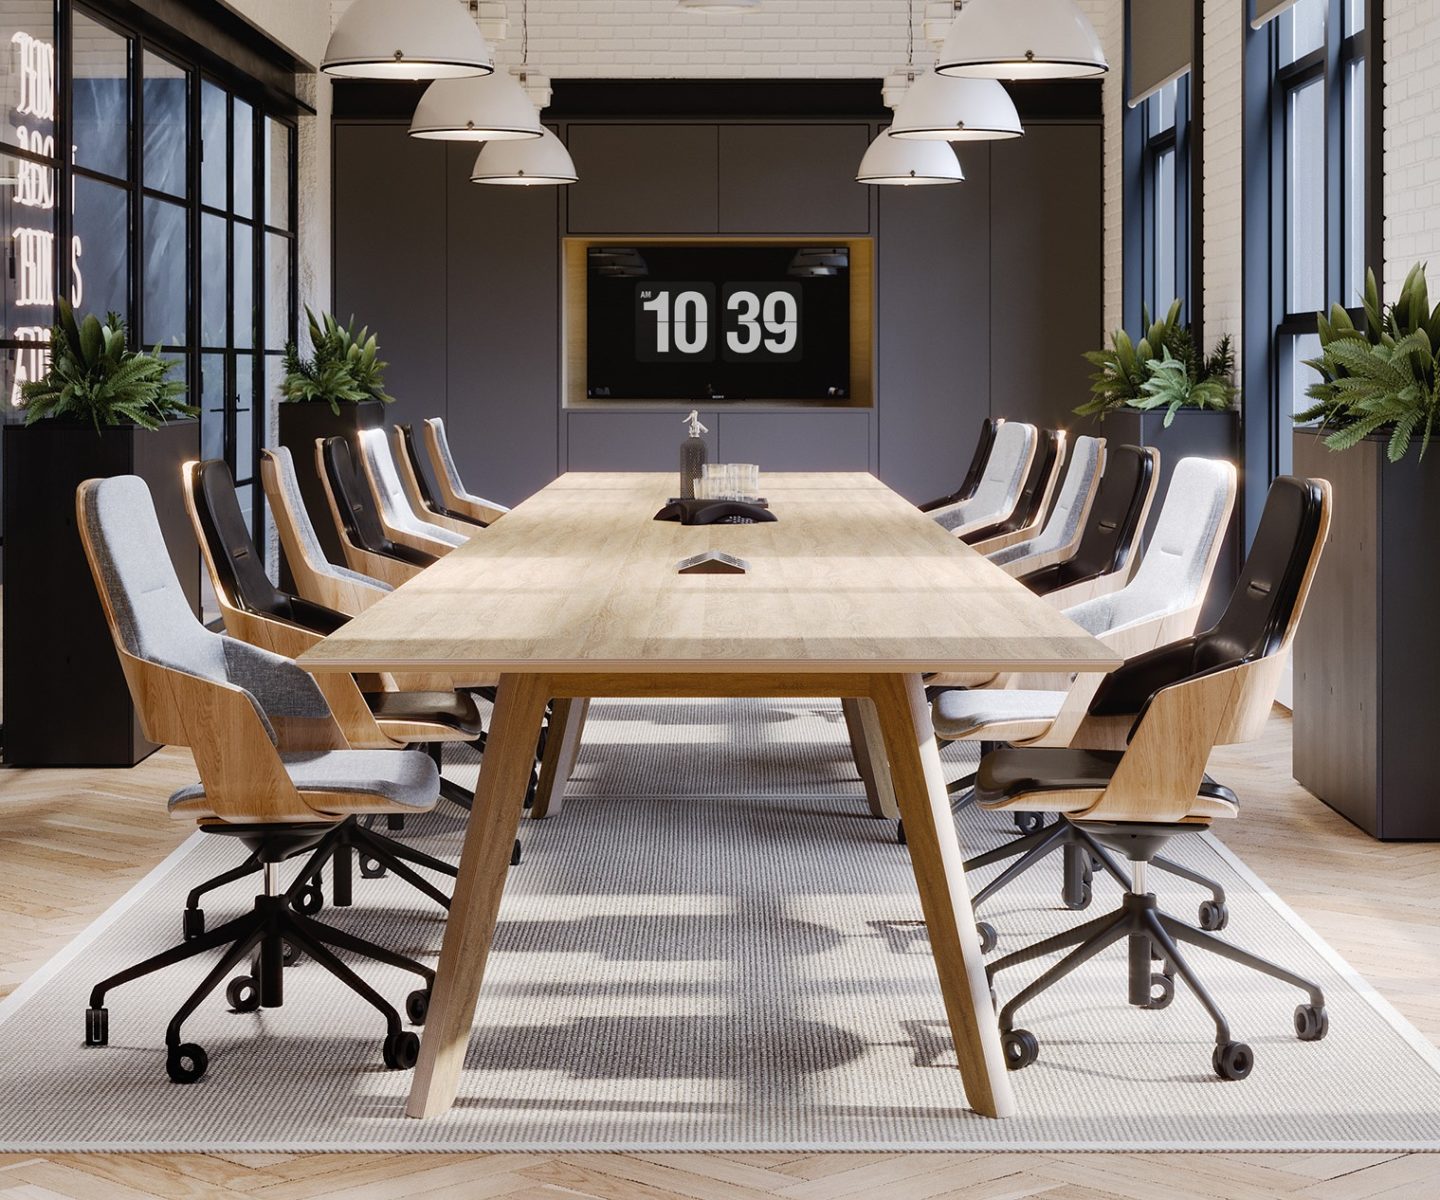 Meeting room furniture